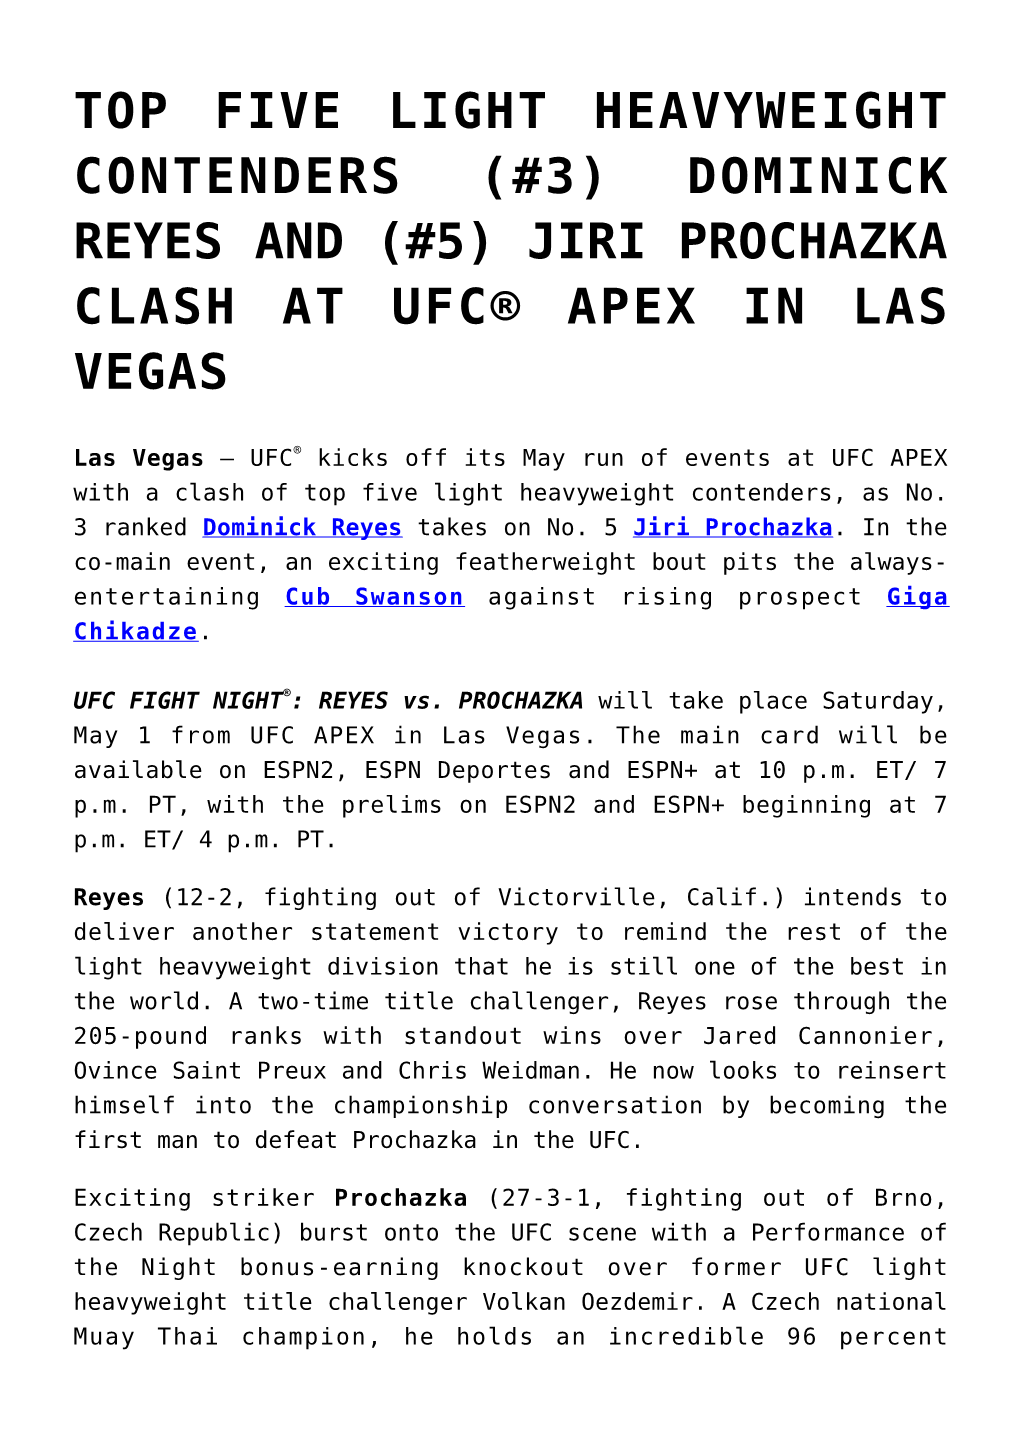 Dominick Reyes and (#5) Jiri Prochazka Clash at Ufc® Apex in Las Vegas